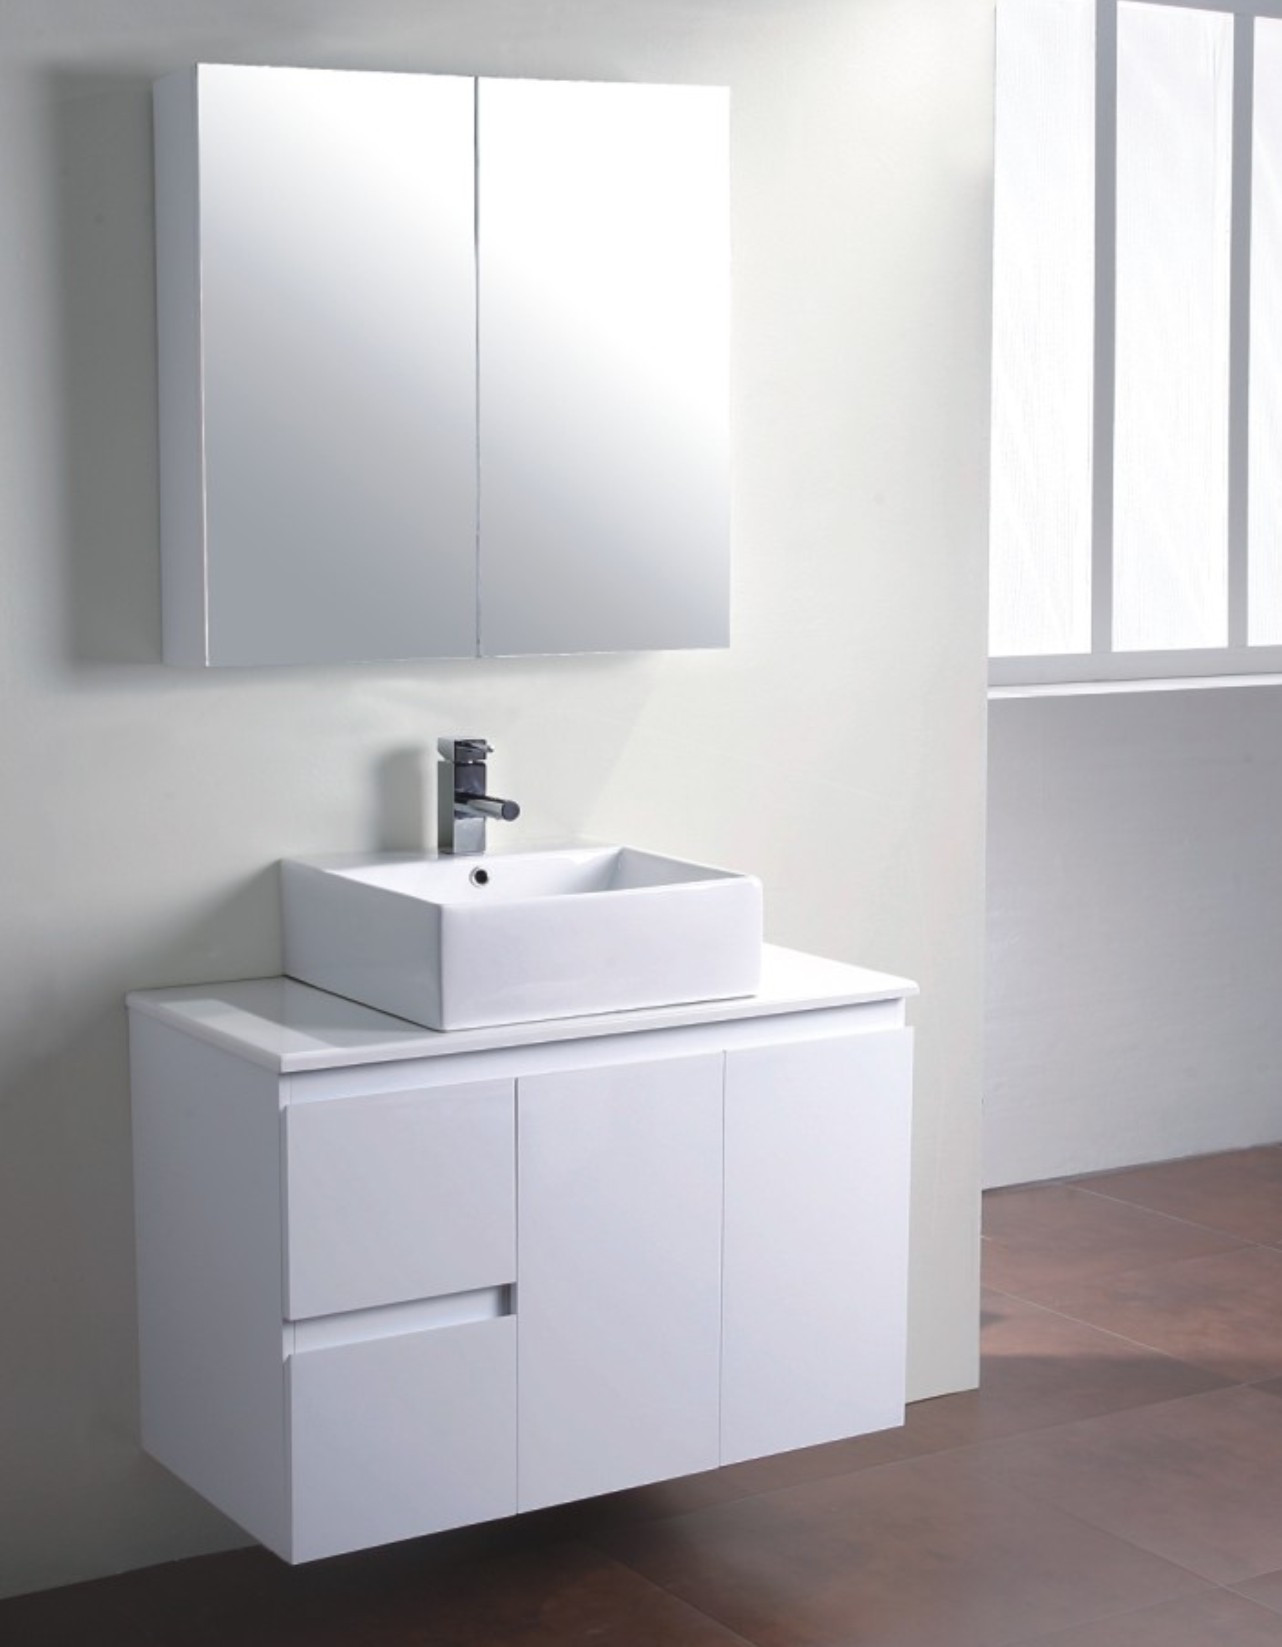 Bathroom Cabinets With Sink
 Bathroom Sink with Cabinet – HomesFeed